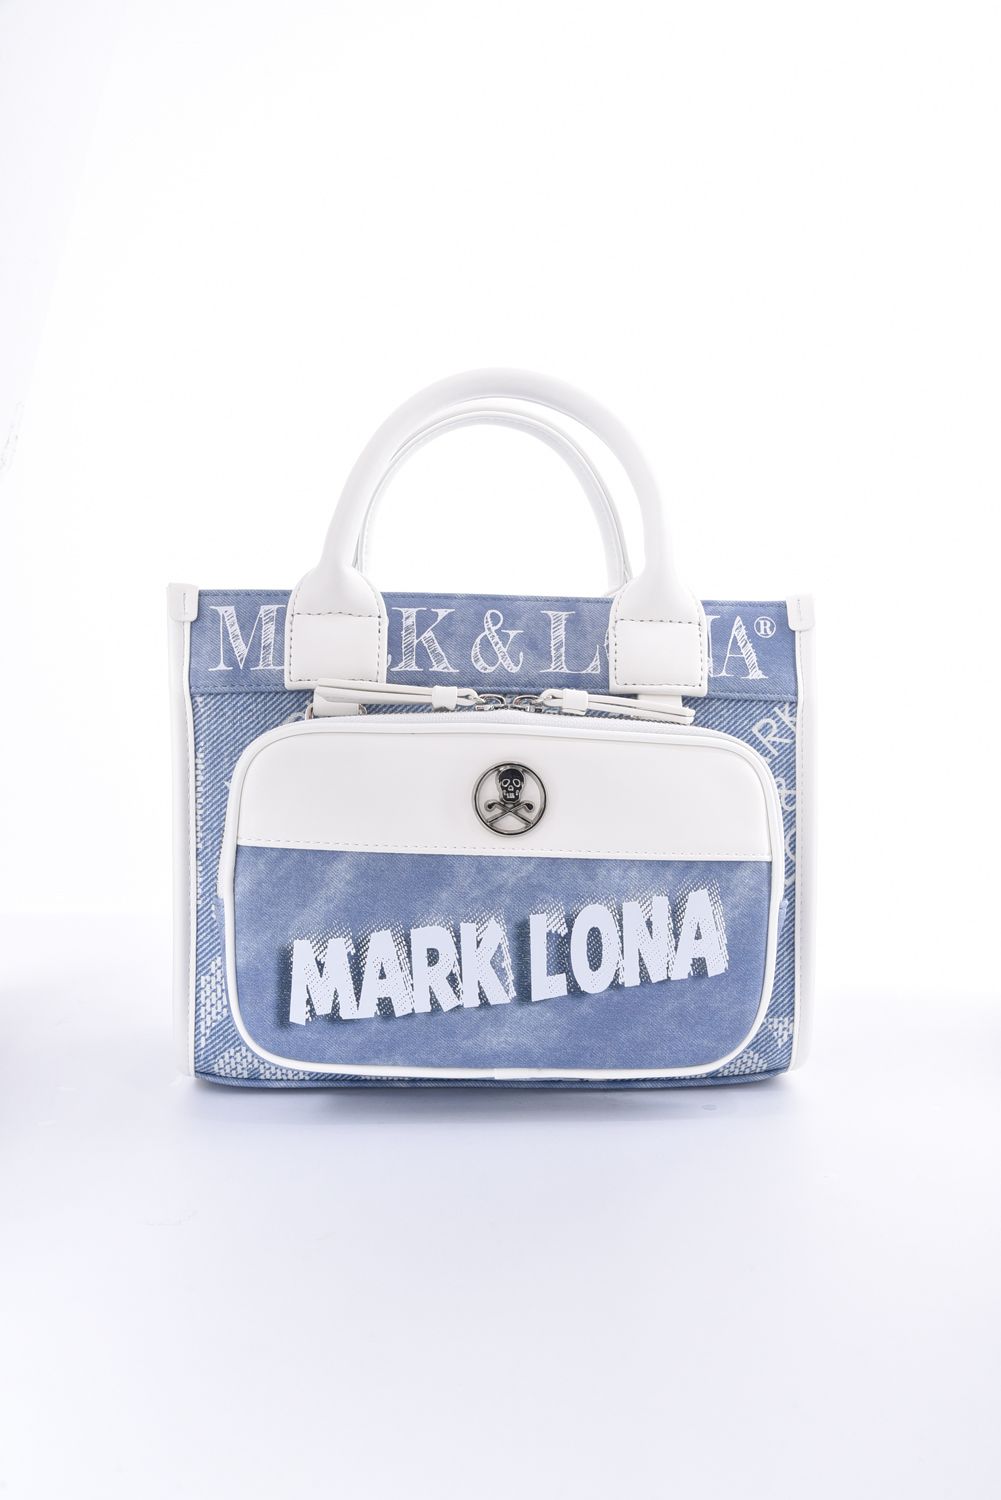 MARK&LONA - 【3月入荷予定】 FLOG CART BAG / シンセティックレザー 